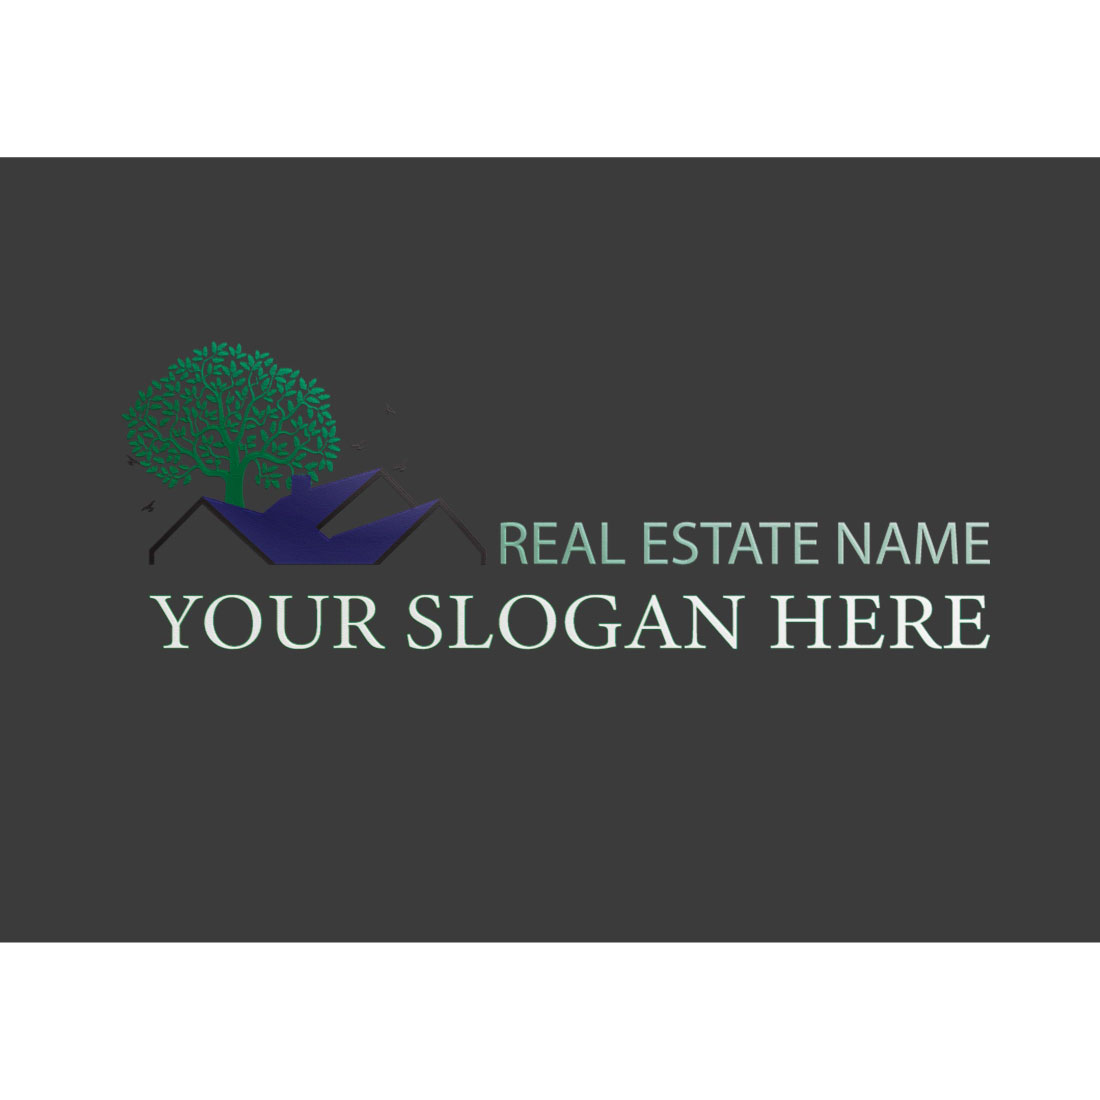 Real estate logo design preview image.